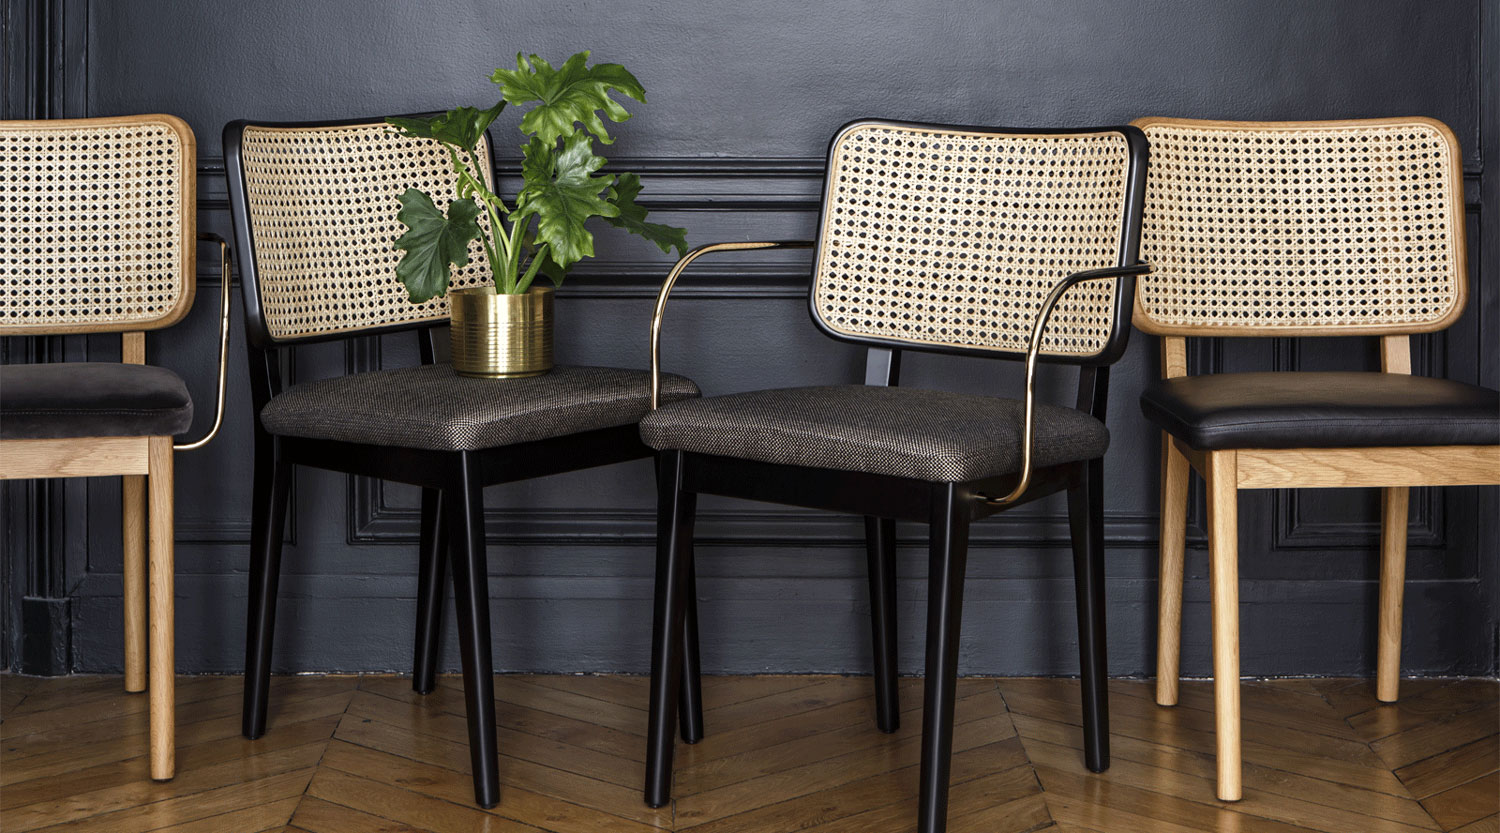 Vienna Straw Furniture - An Exciting Come Back To Modern Interior - WWW.AUTHENTICINTERIOR.COM design studio & blog